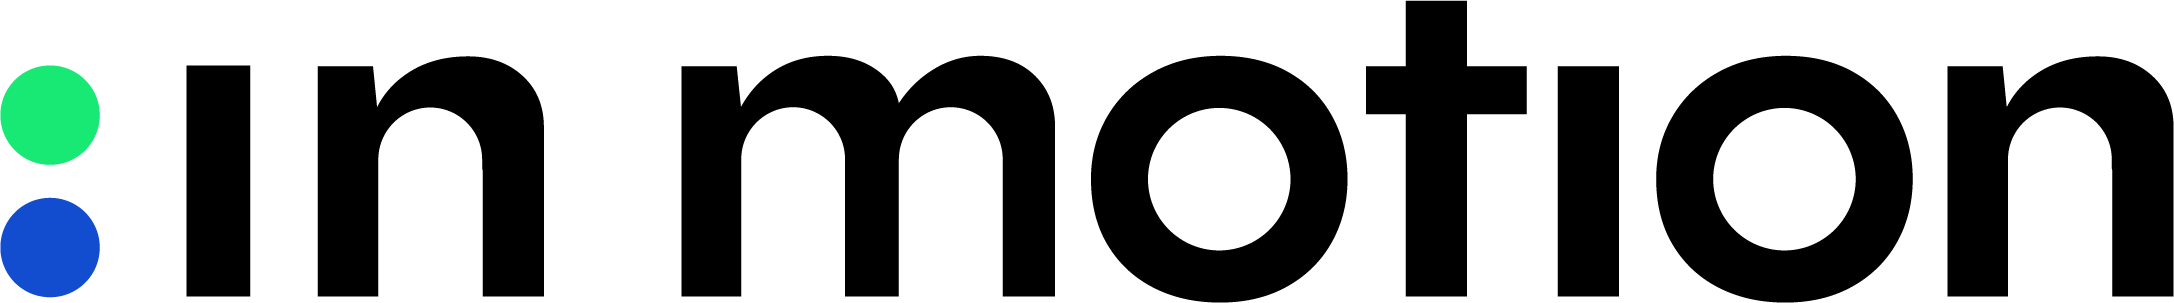 Logo Principal 1 (2)